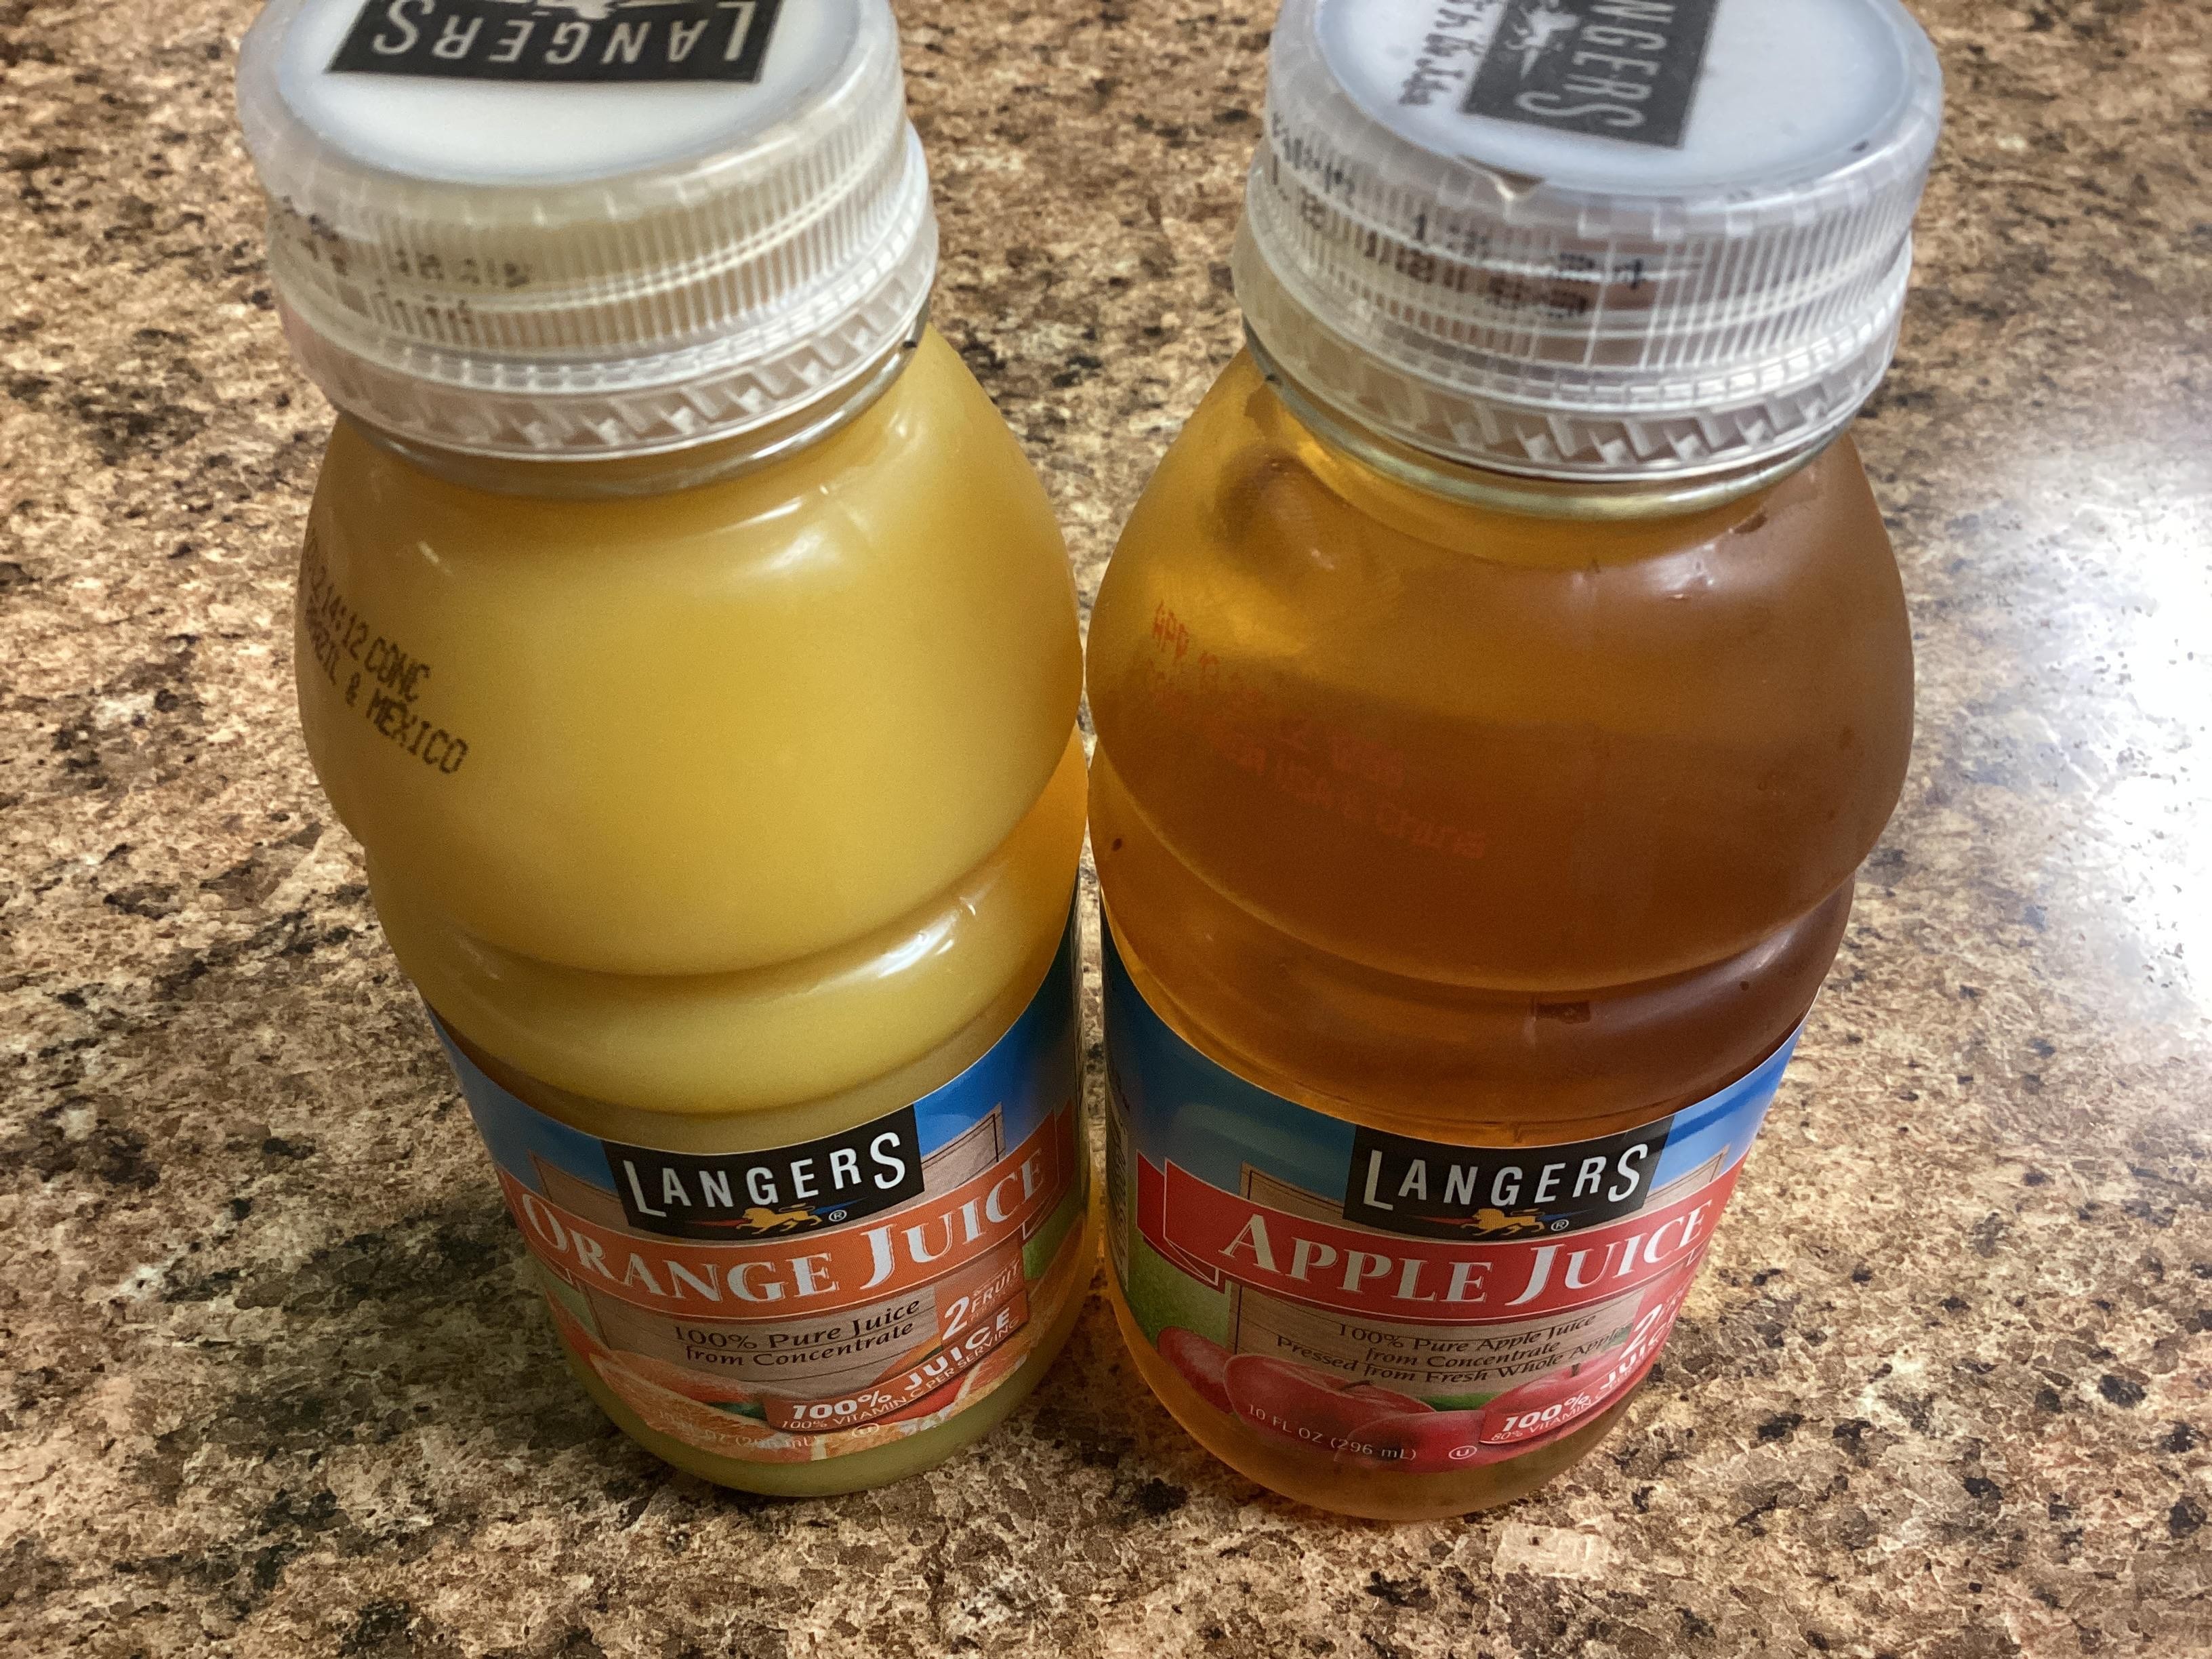 O.J or Apple juice